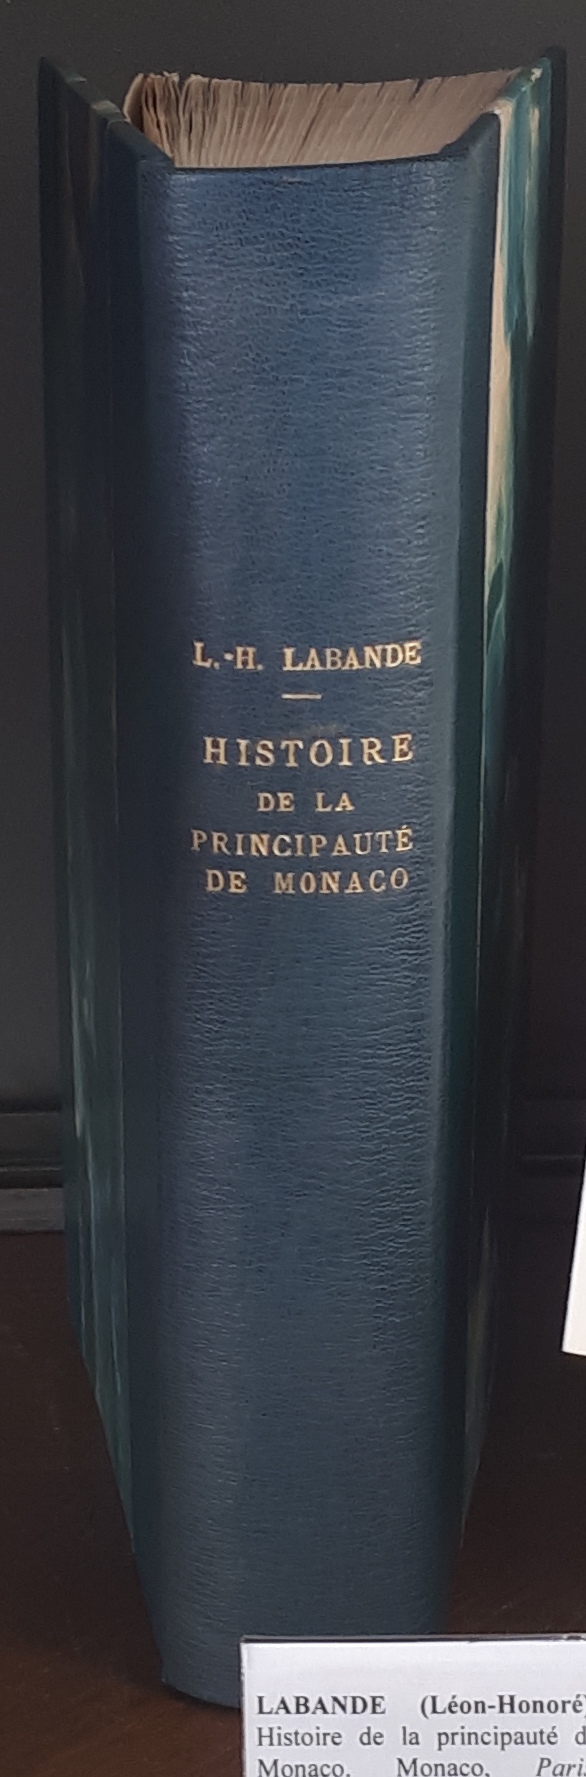 Labande - Monaco.jpg